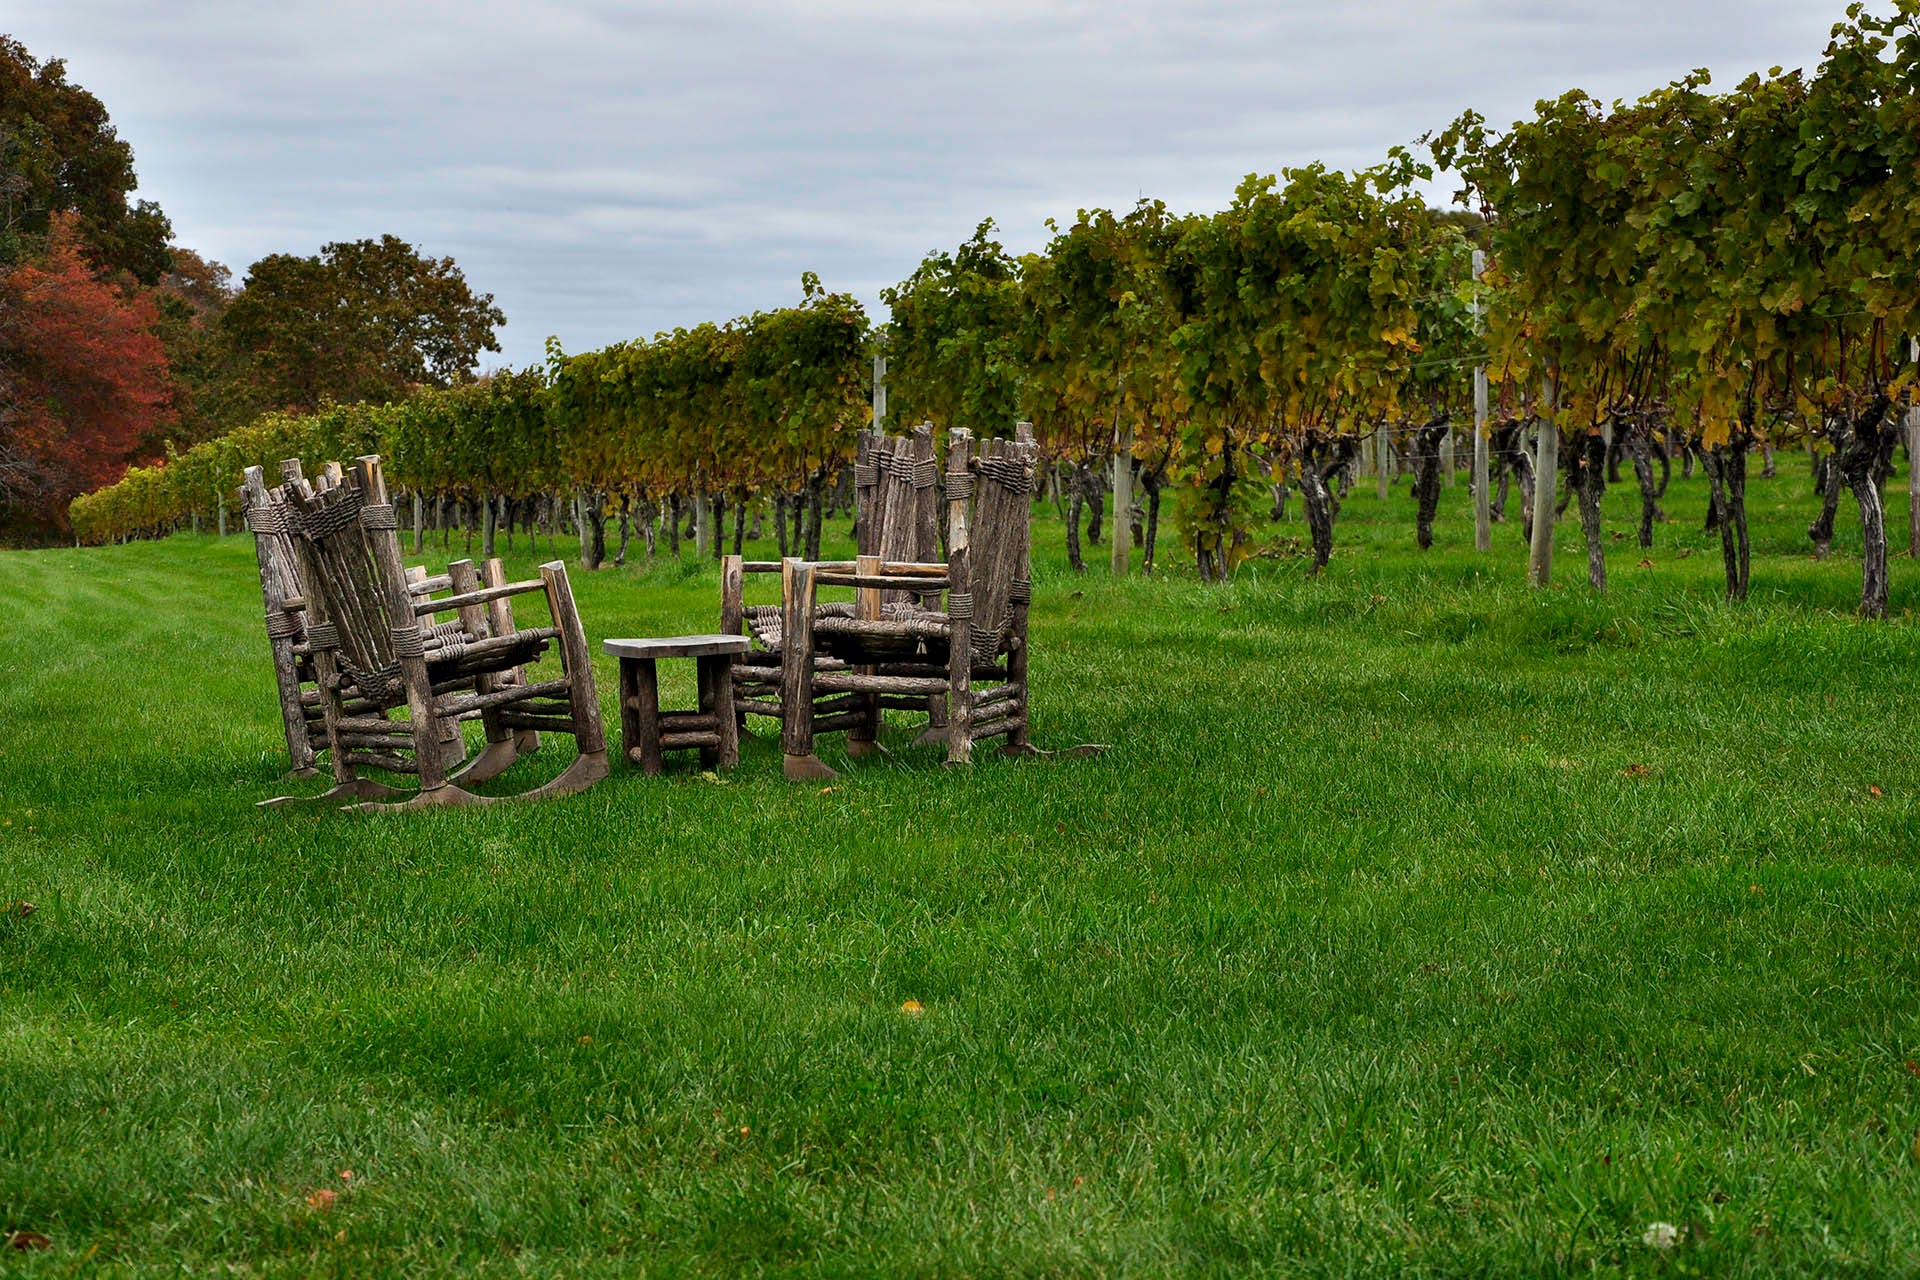 A vineyard in Rhode Island